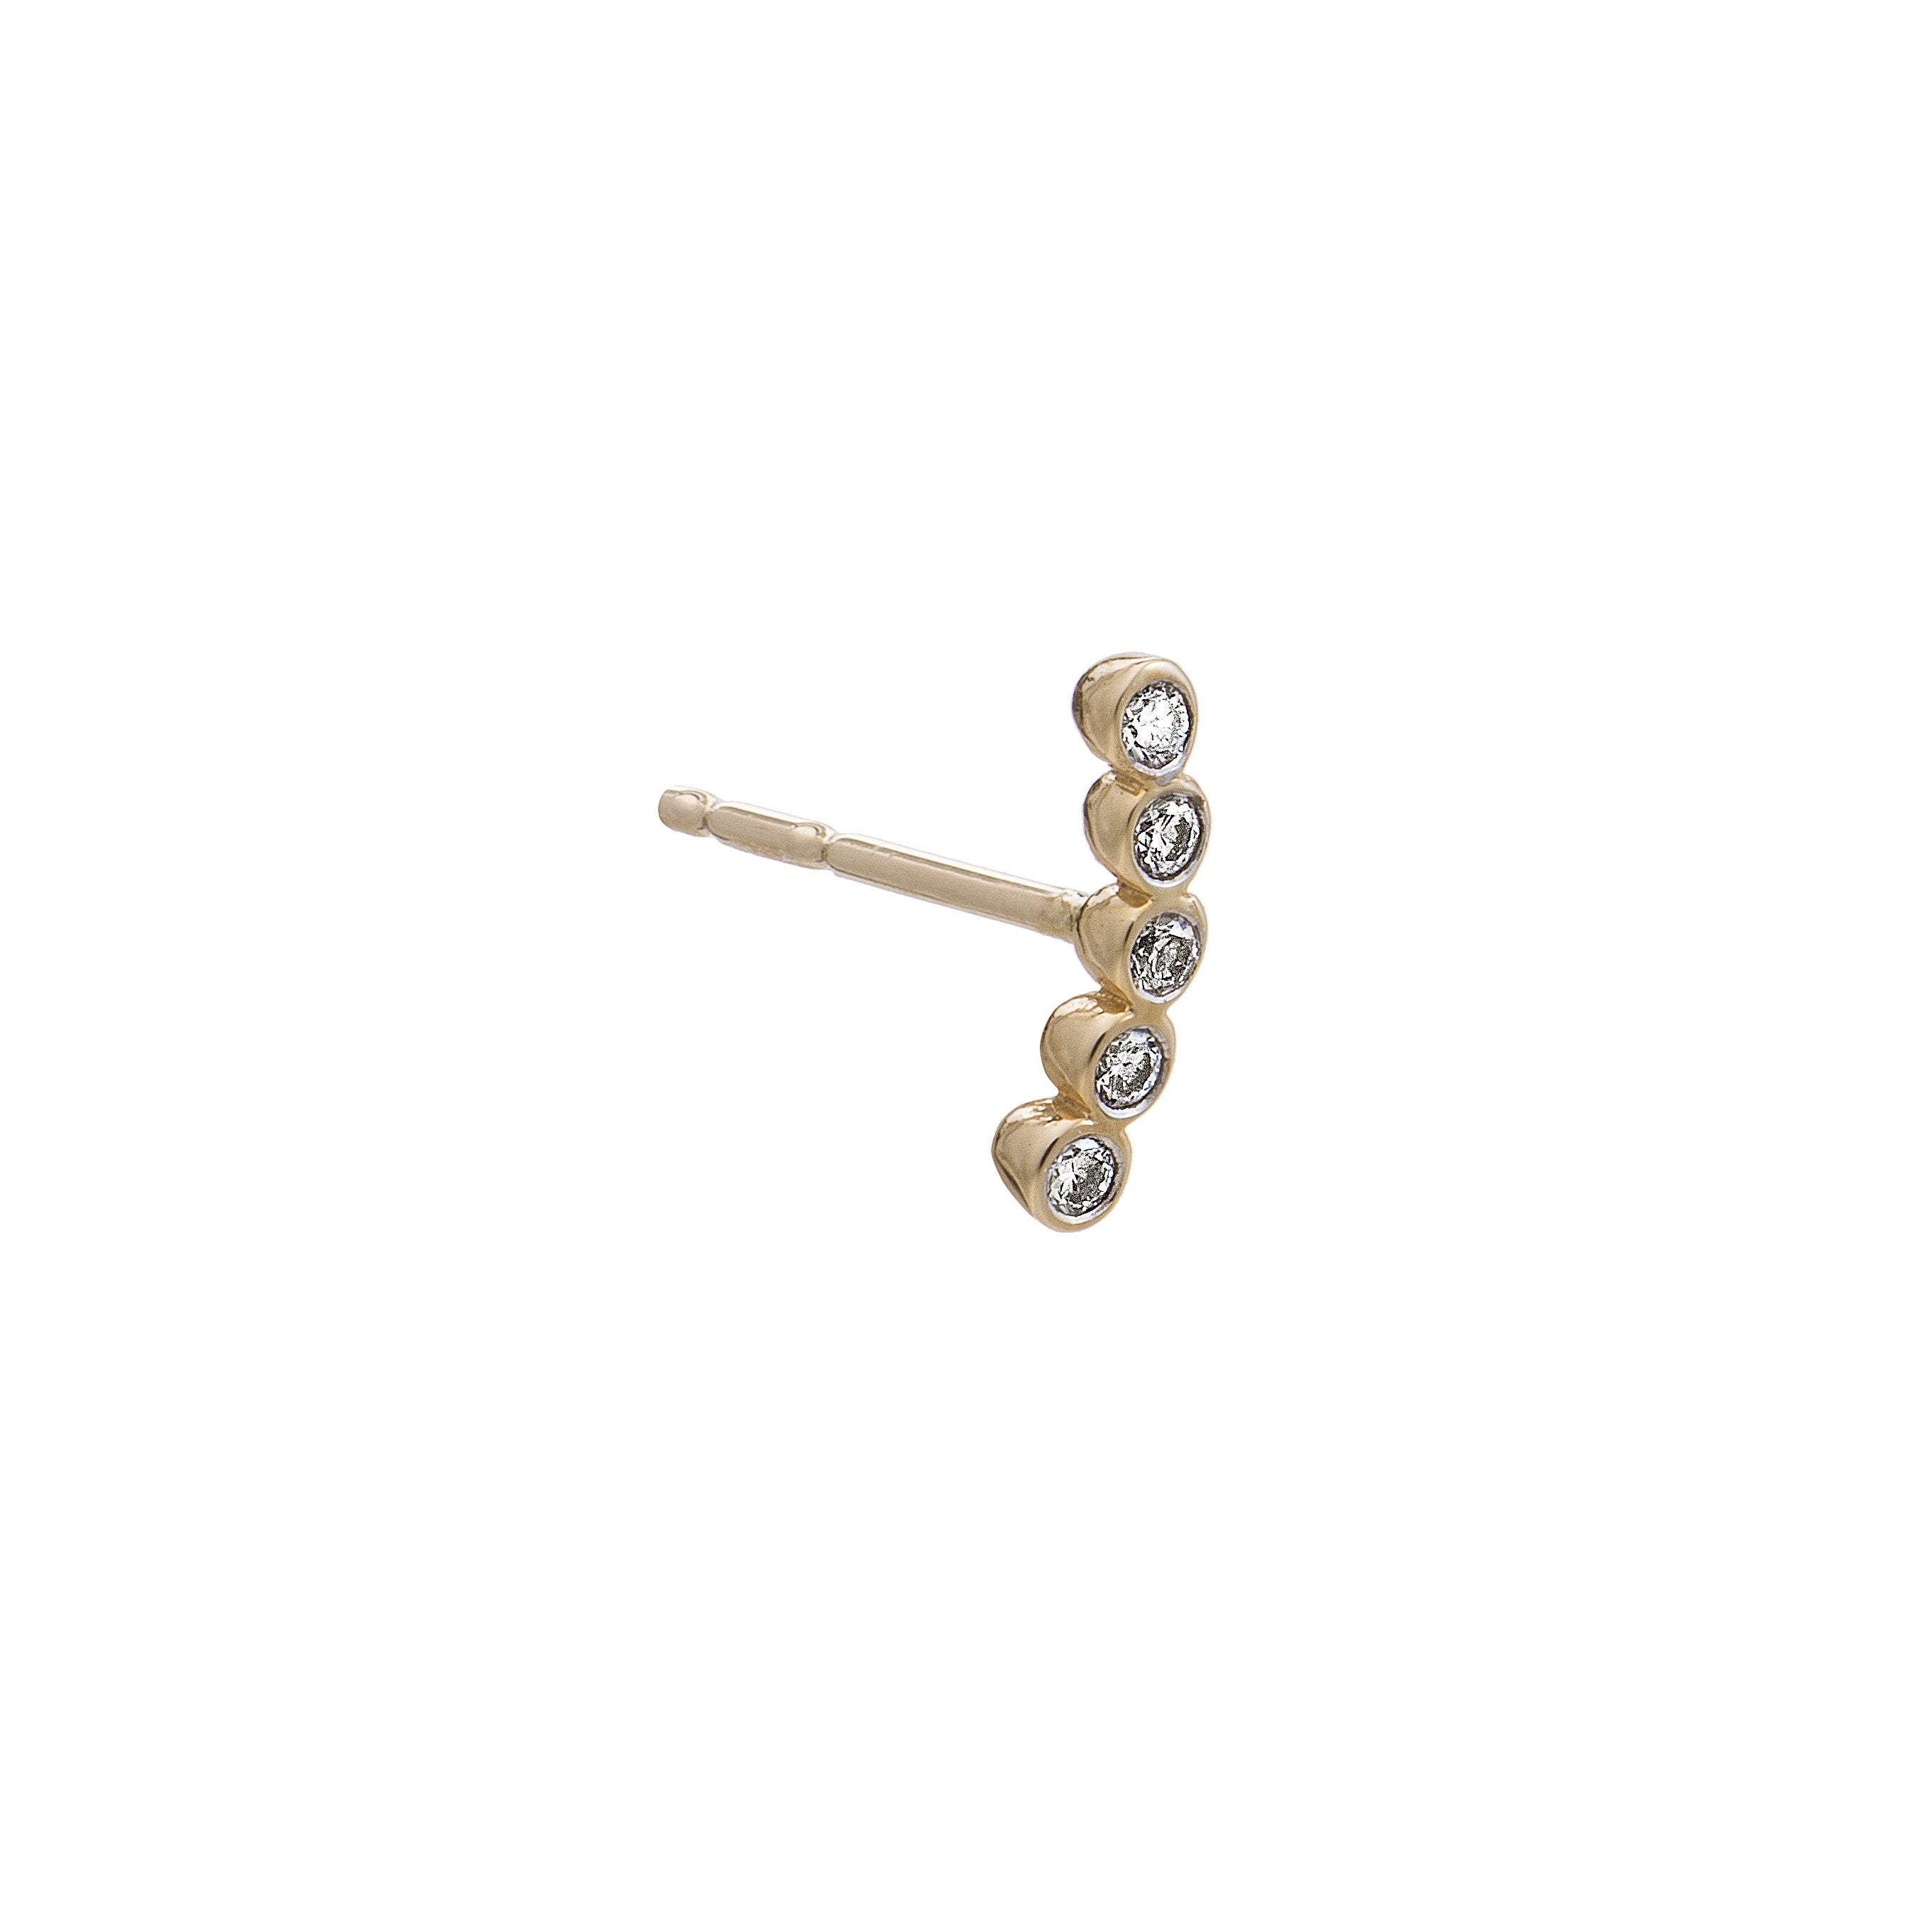 Jewseen 14K Yellow Gold Star Threadless Earrings Flat Back Studs 16G  Cartilage Earring Helix Piercing Jewellery Tragus Stud Earlobe Piercing for  Women Men Gold Barbell : Amazon.co.uk: Fashion